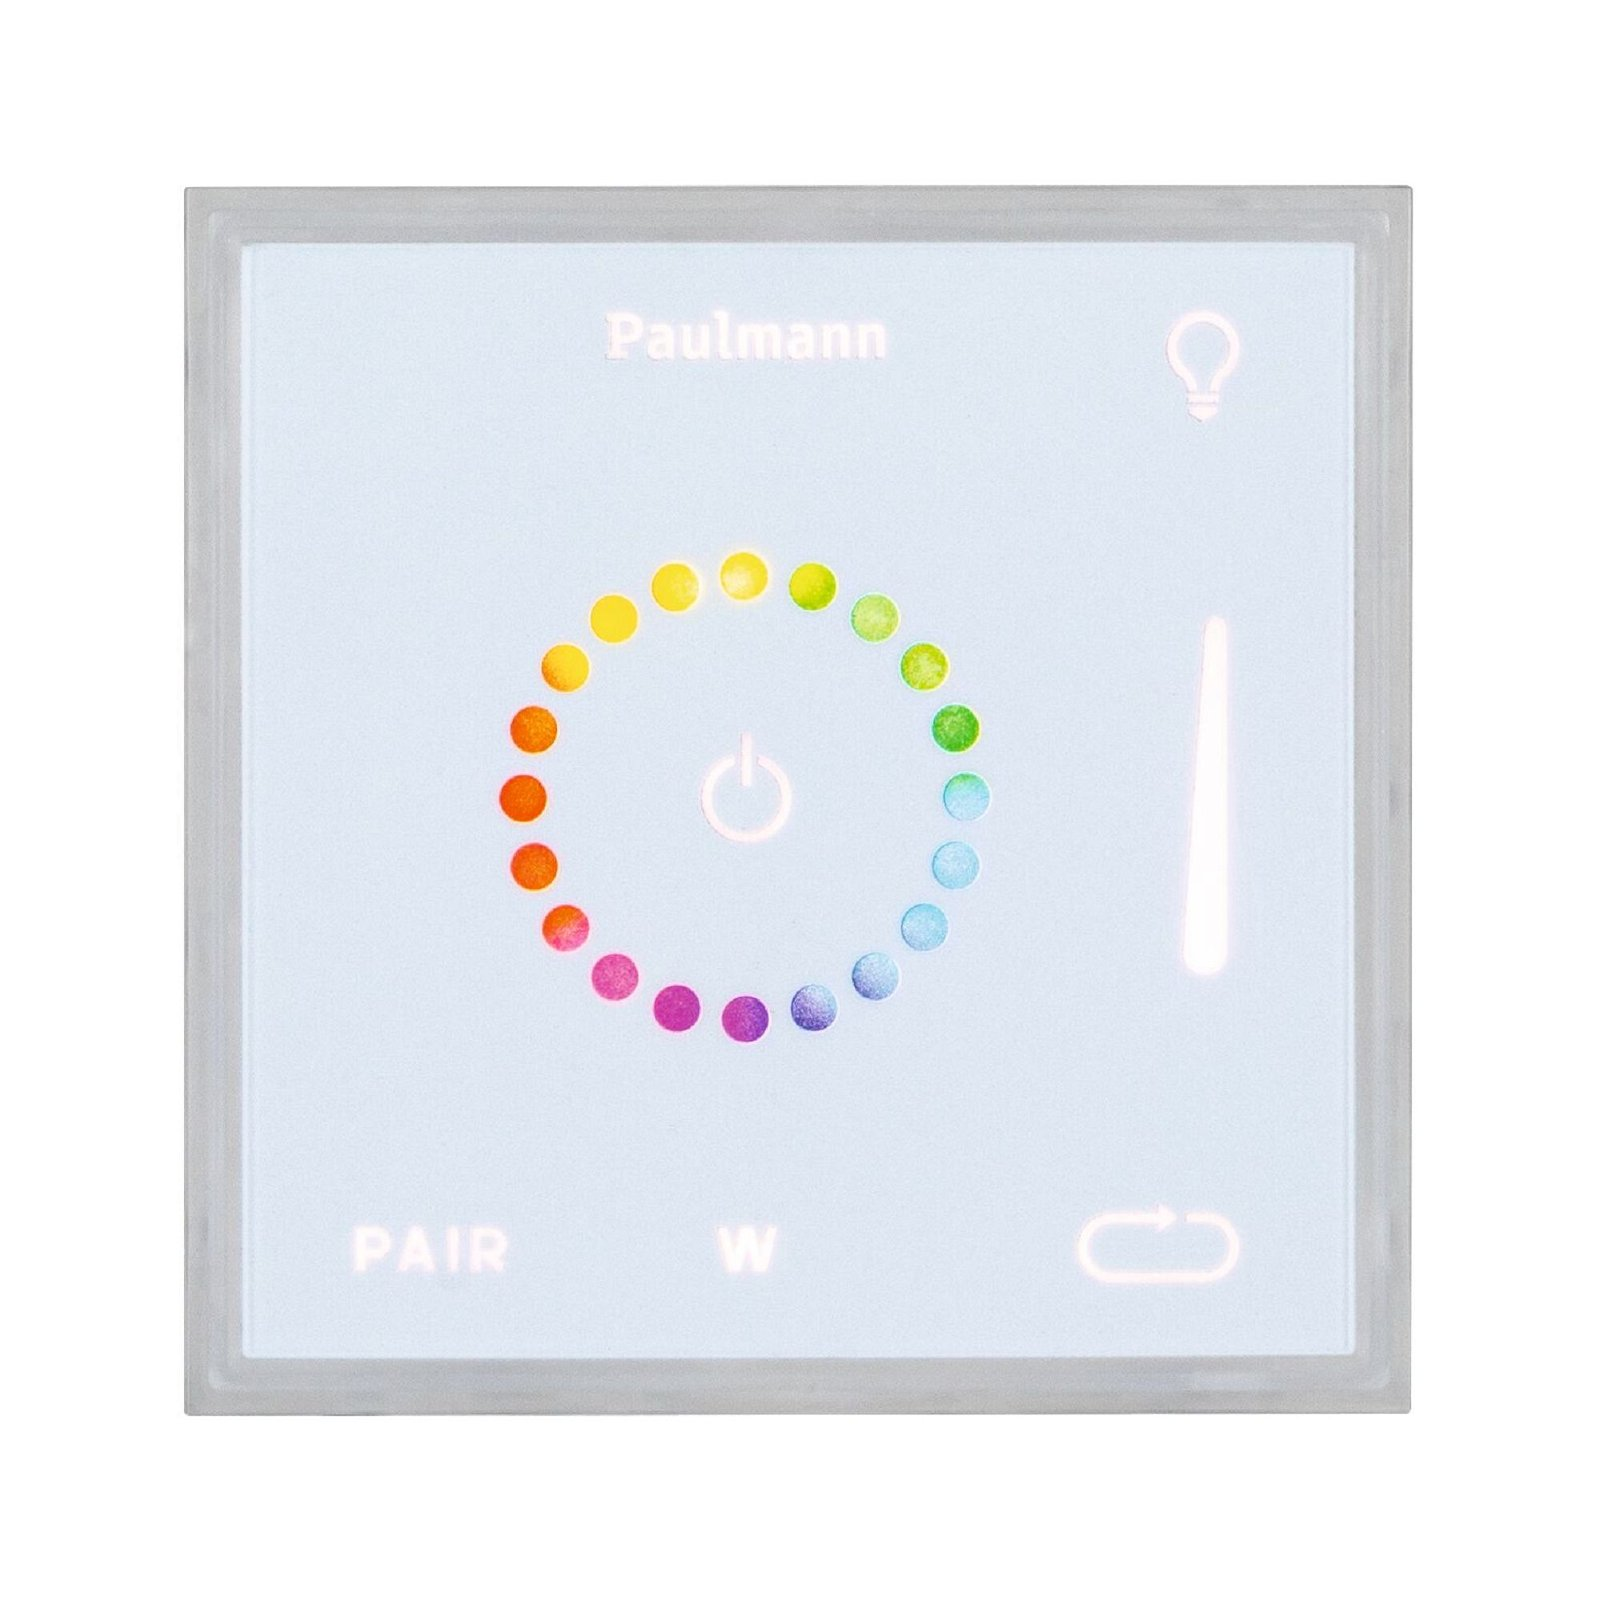 PAULMANN Tiles RGBW|Tunable LICHT LED White (78423) LumiTiles Farbwechsel